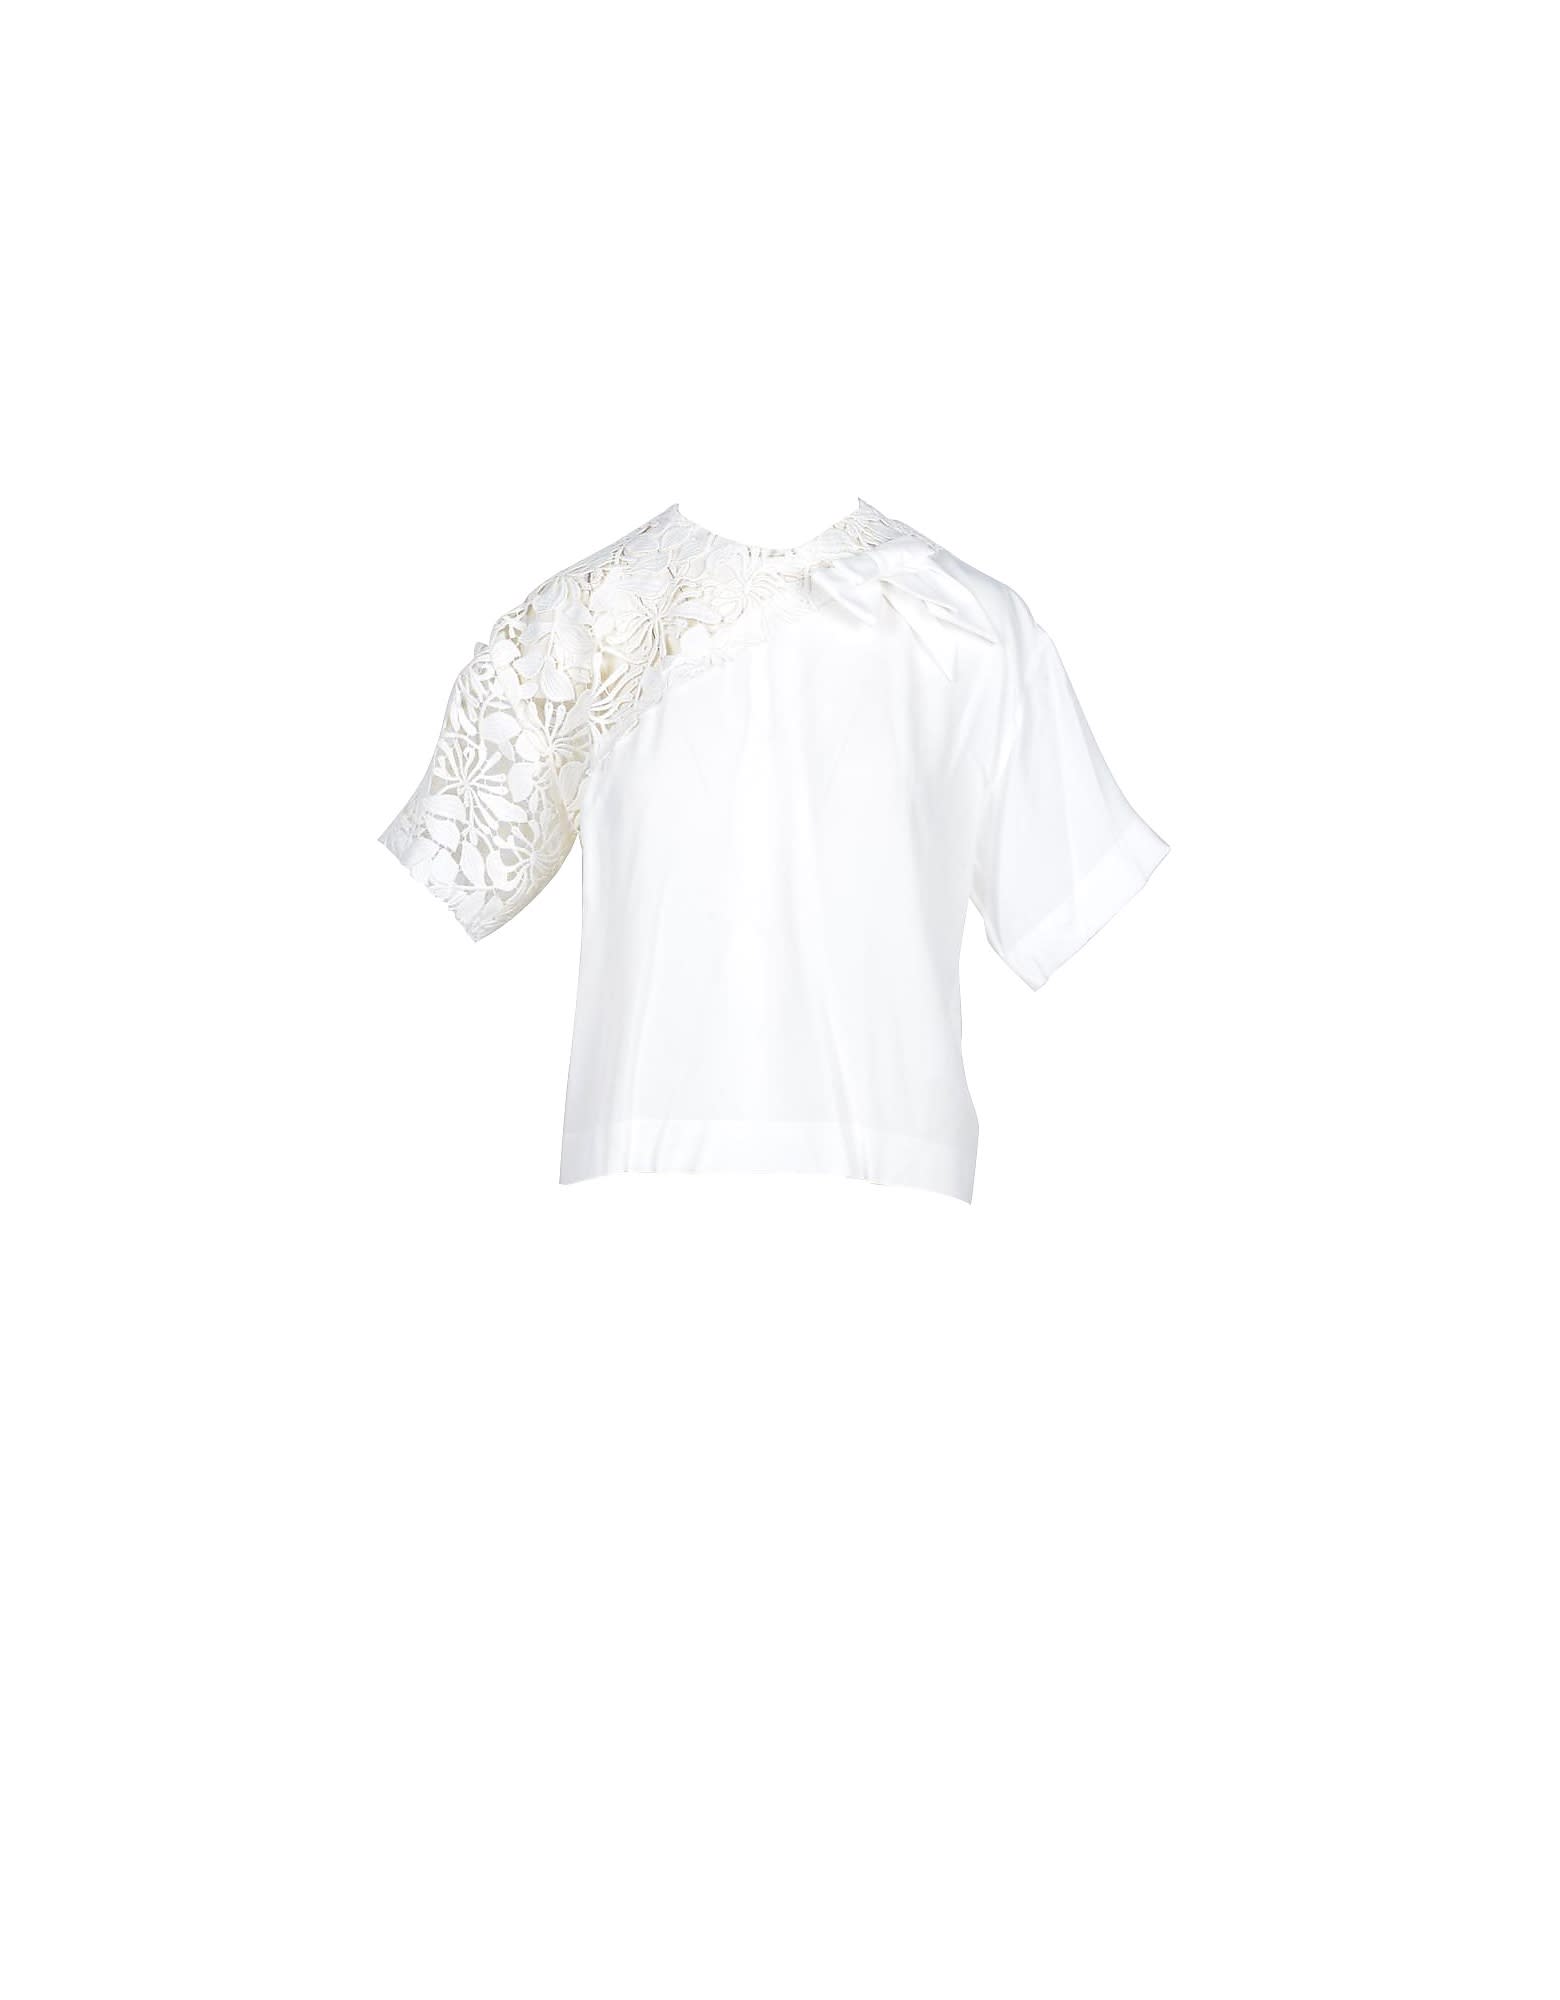 N.21 N°21 Womens White Shirt